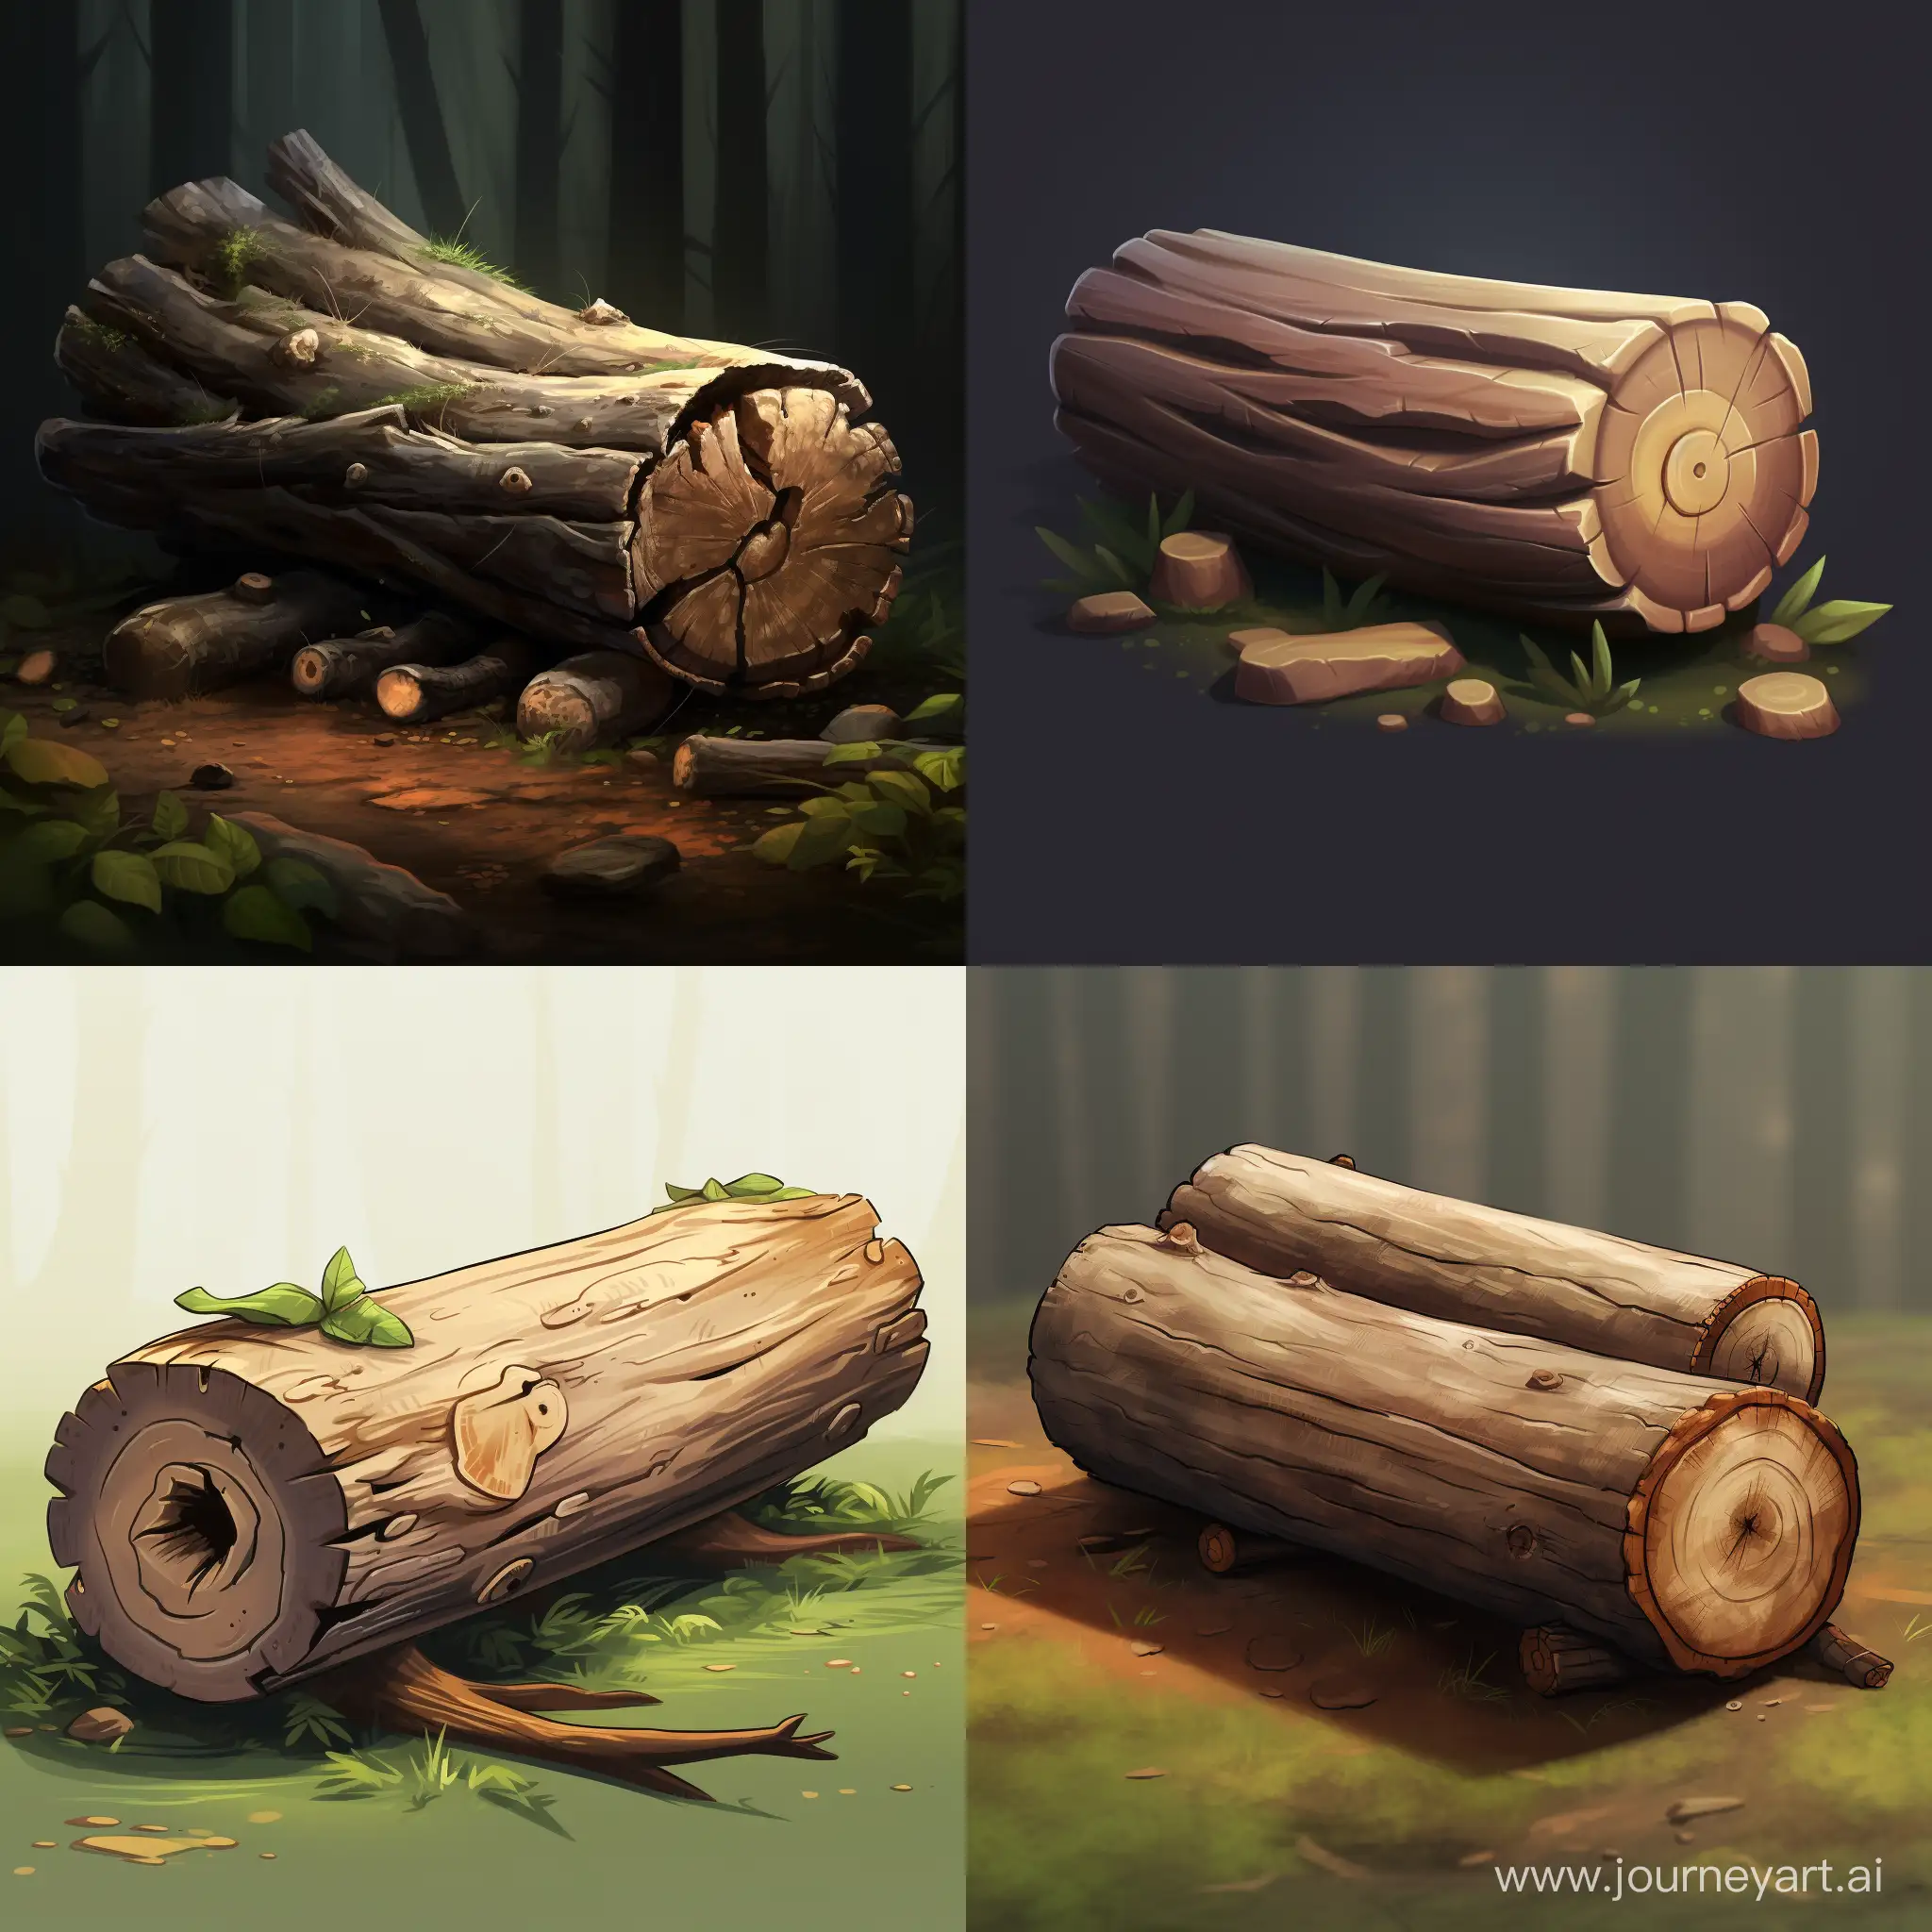 can you generte a log